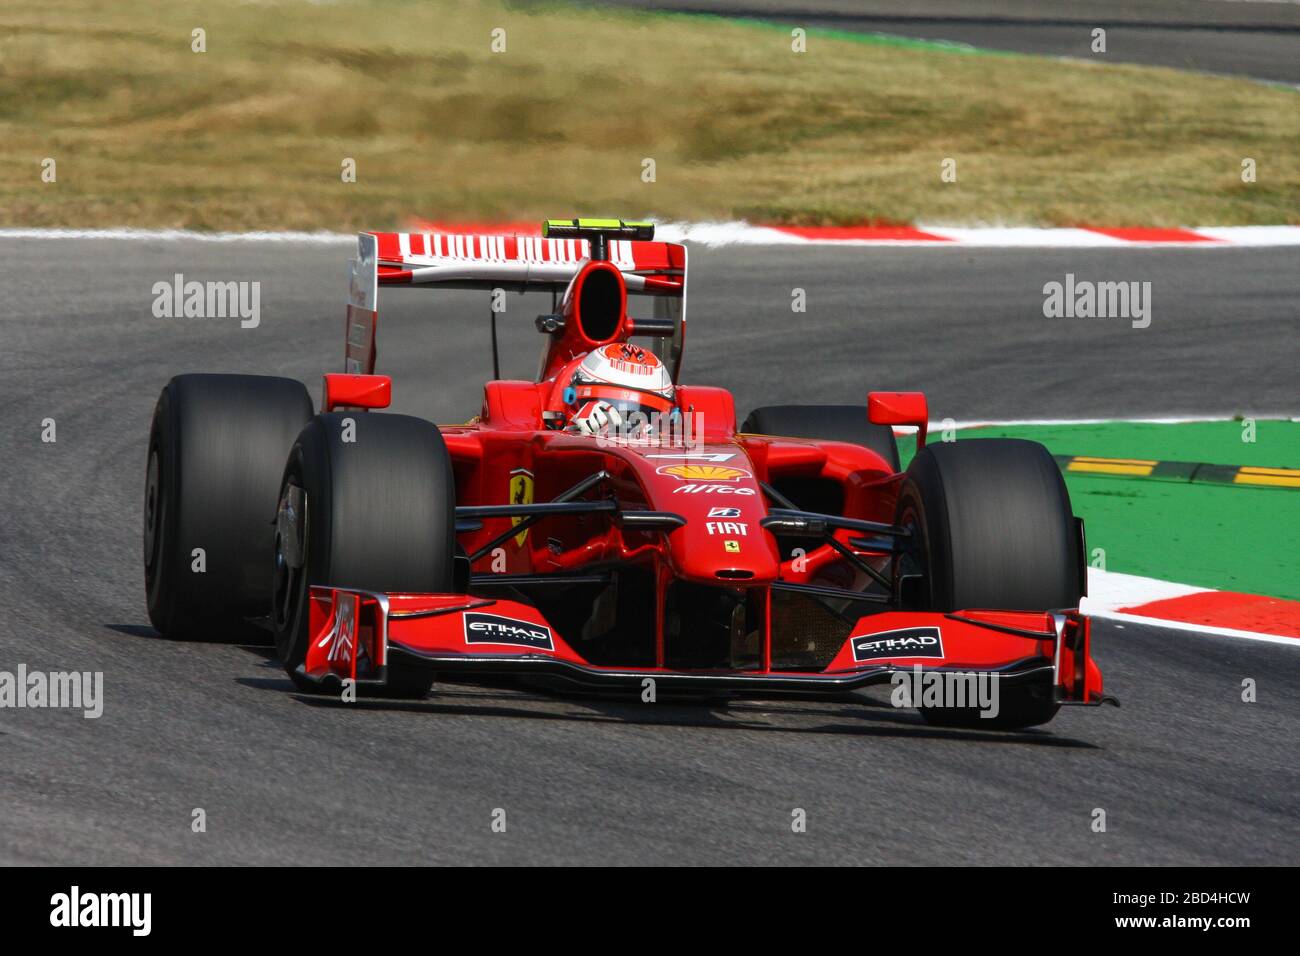 Kimi Raikkonen, Ferrari F60, GP d'Italia 2009, Monza Foto stock - Alamy